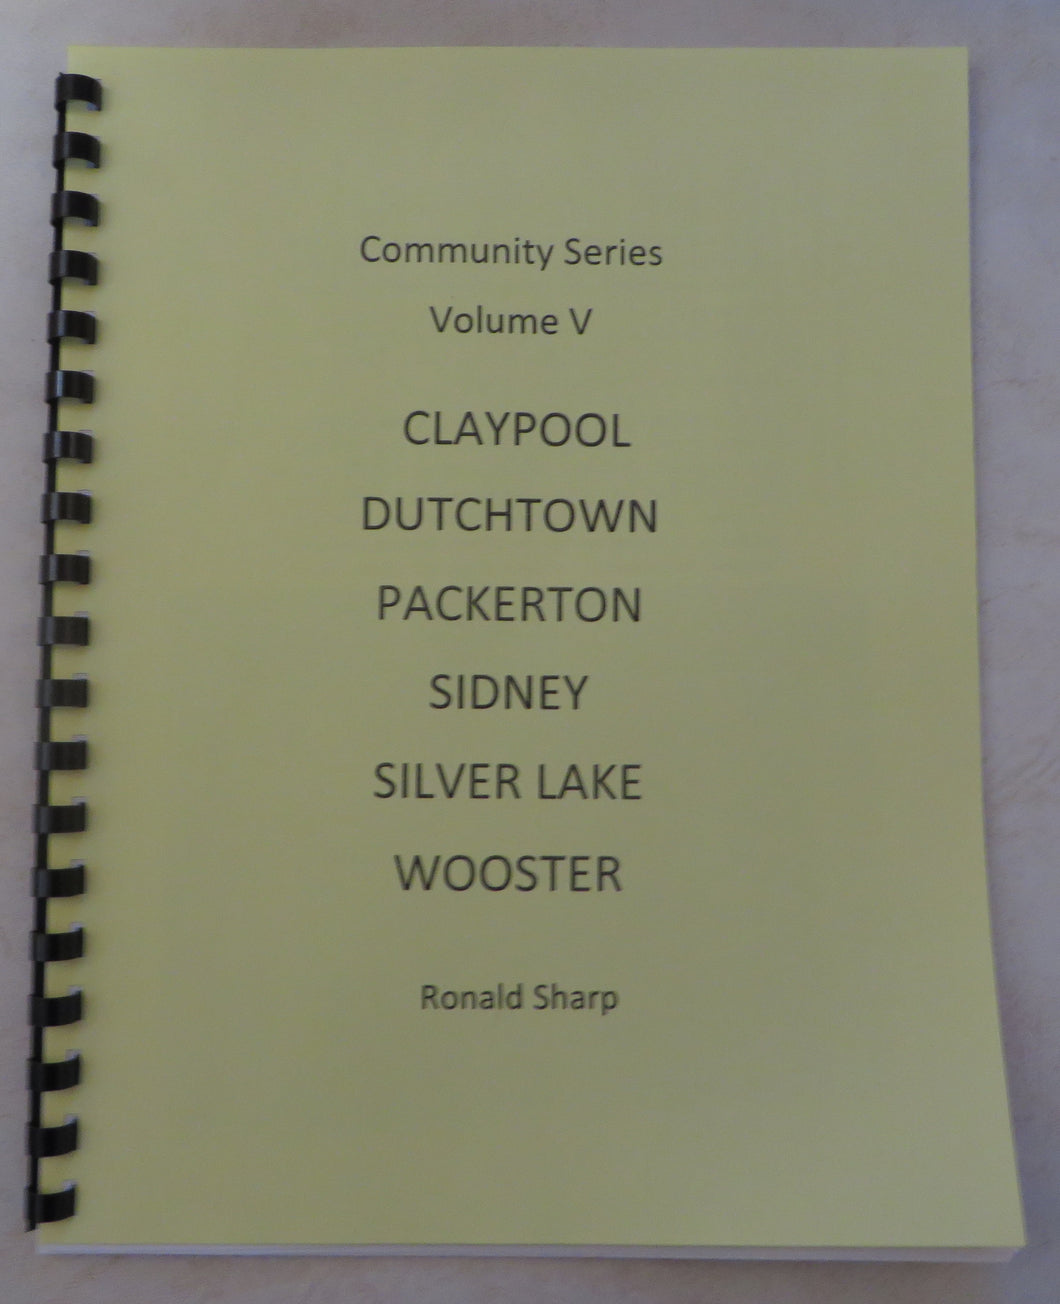 Community Series, Volume 5, Claypool, Dutchtown, Packerton, Sidney, Silver Lake, Wooster